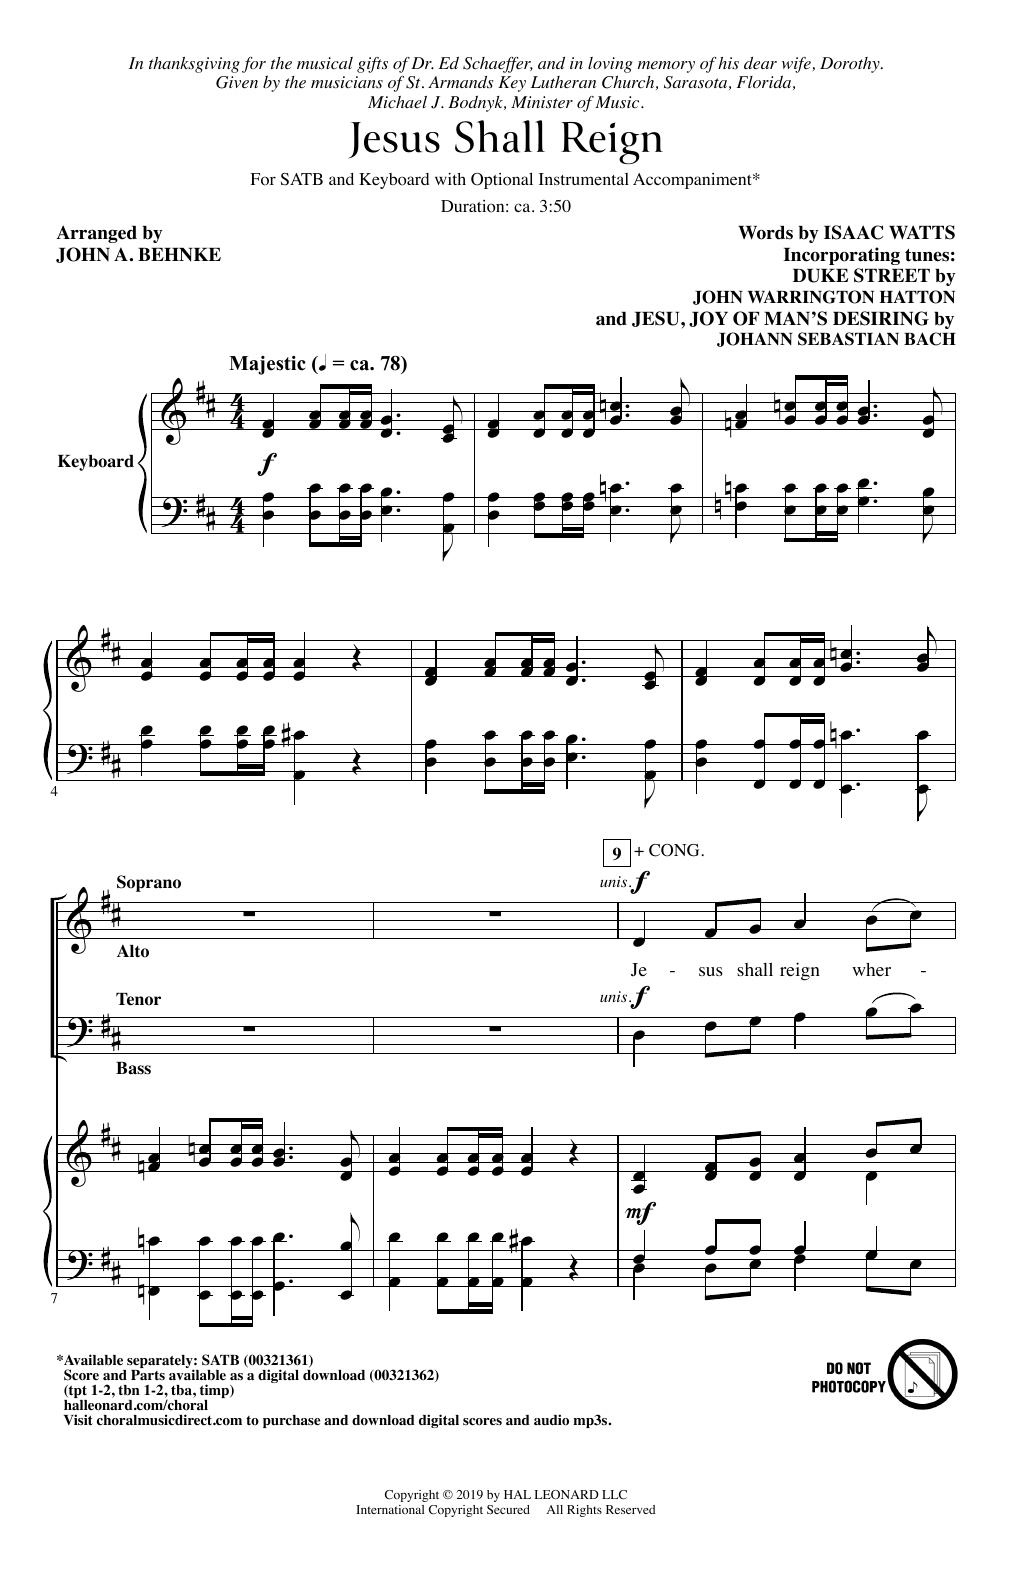 Isaac Watts Jesus Shall Reign (arr. John A. Behnke) Sheet Music Notes & Chords for SATB Choir - Download or Print PDF